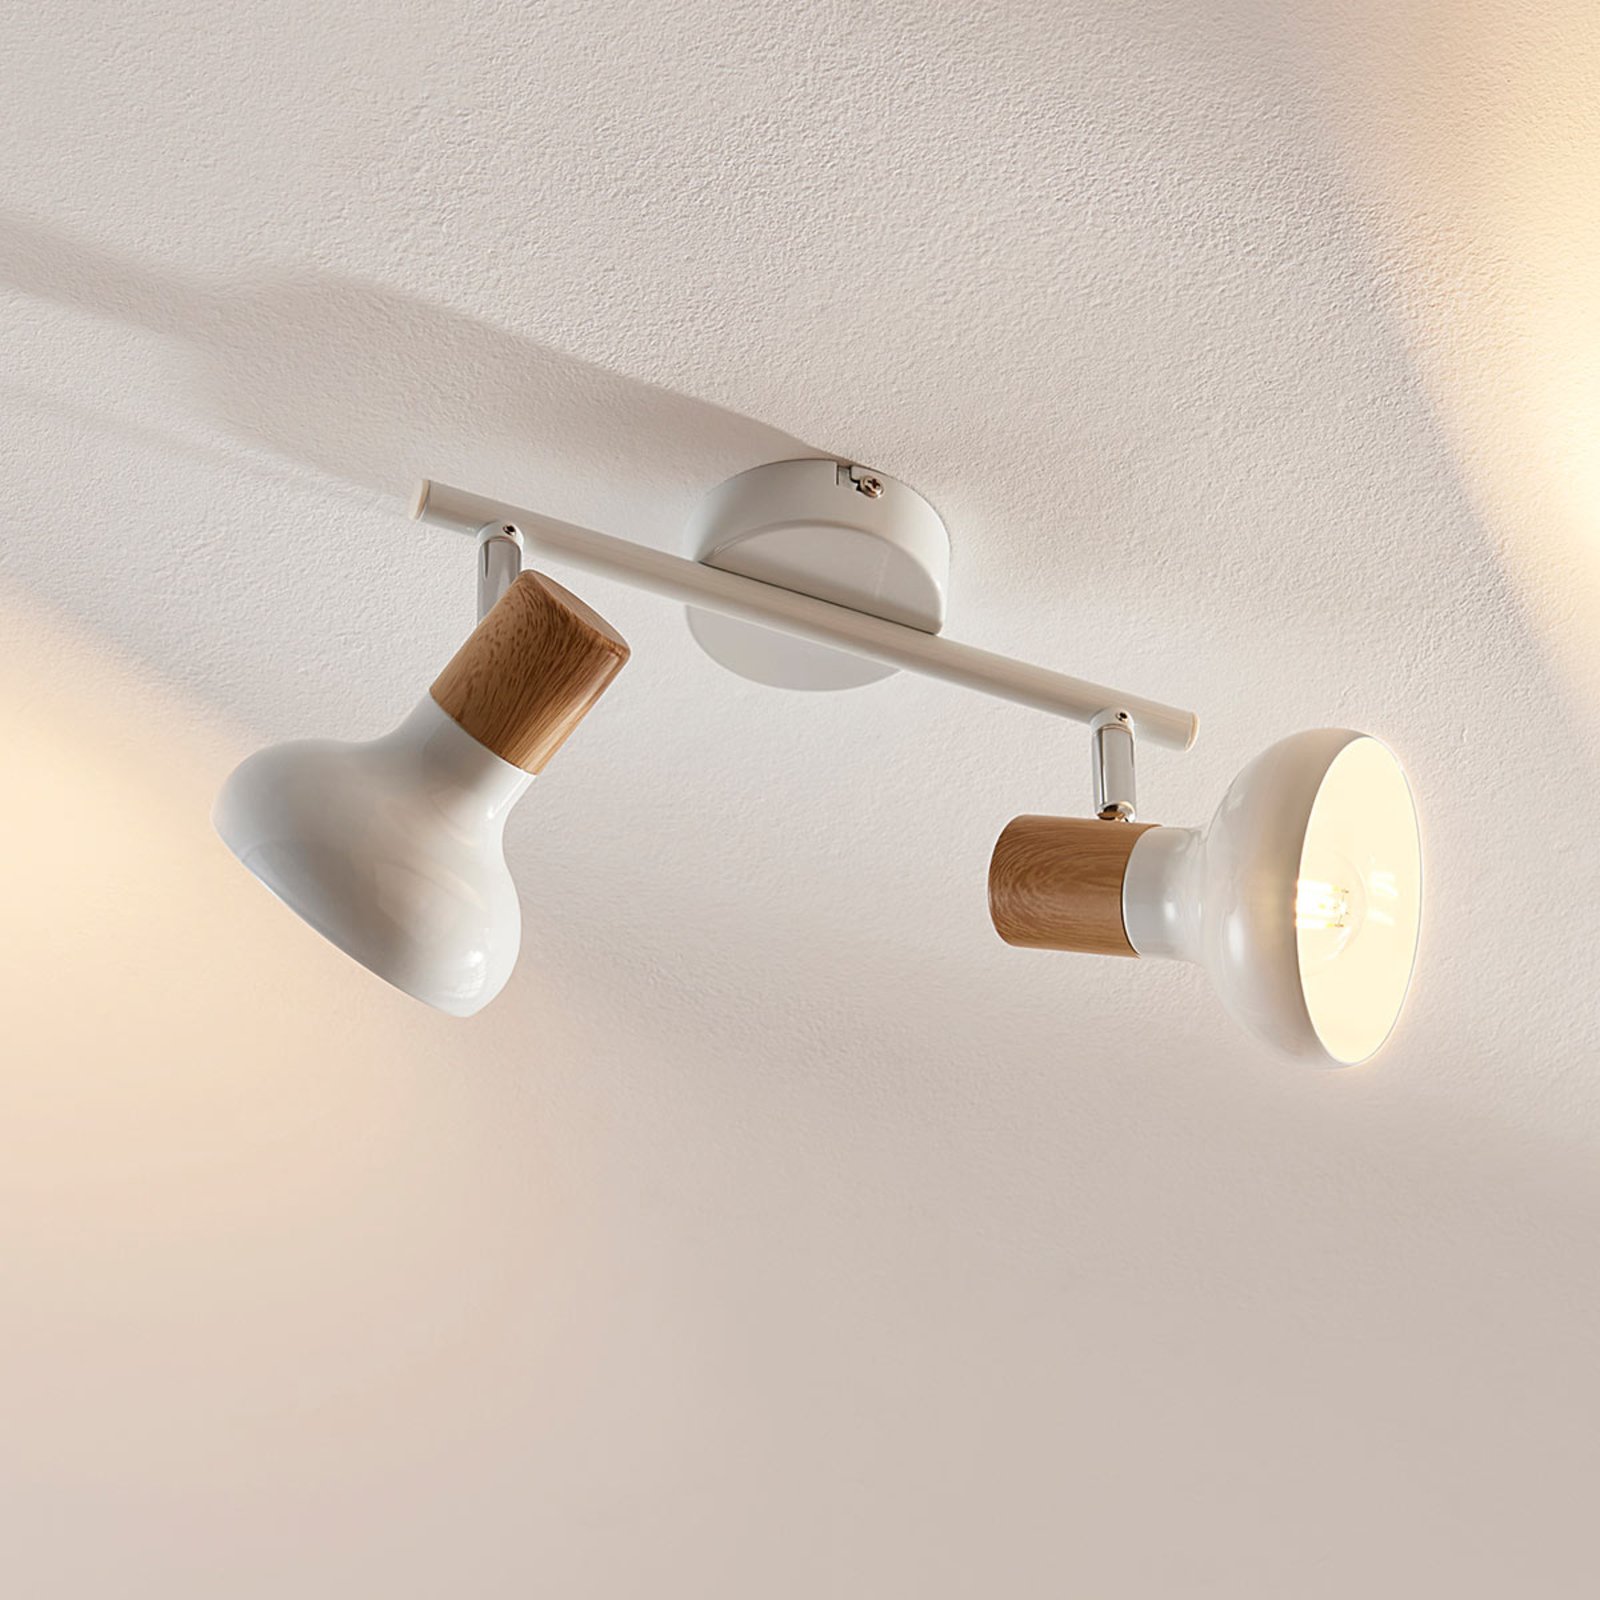 Plafondlamp Fridolin in wit metaal met twee lampen